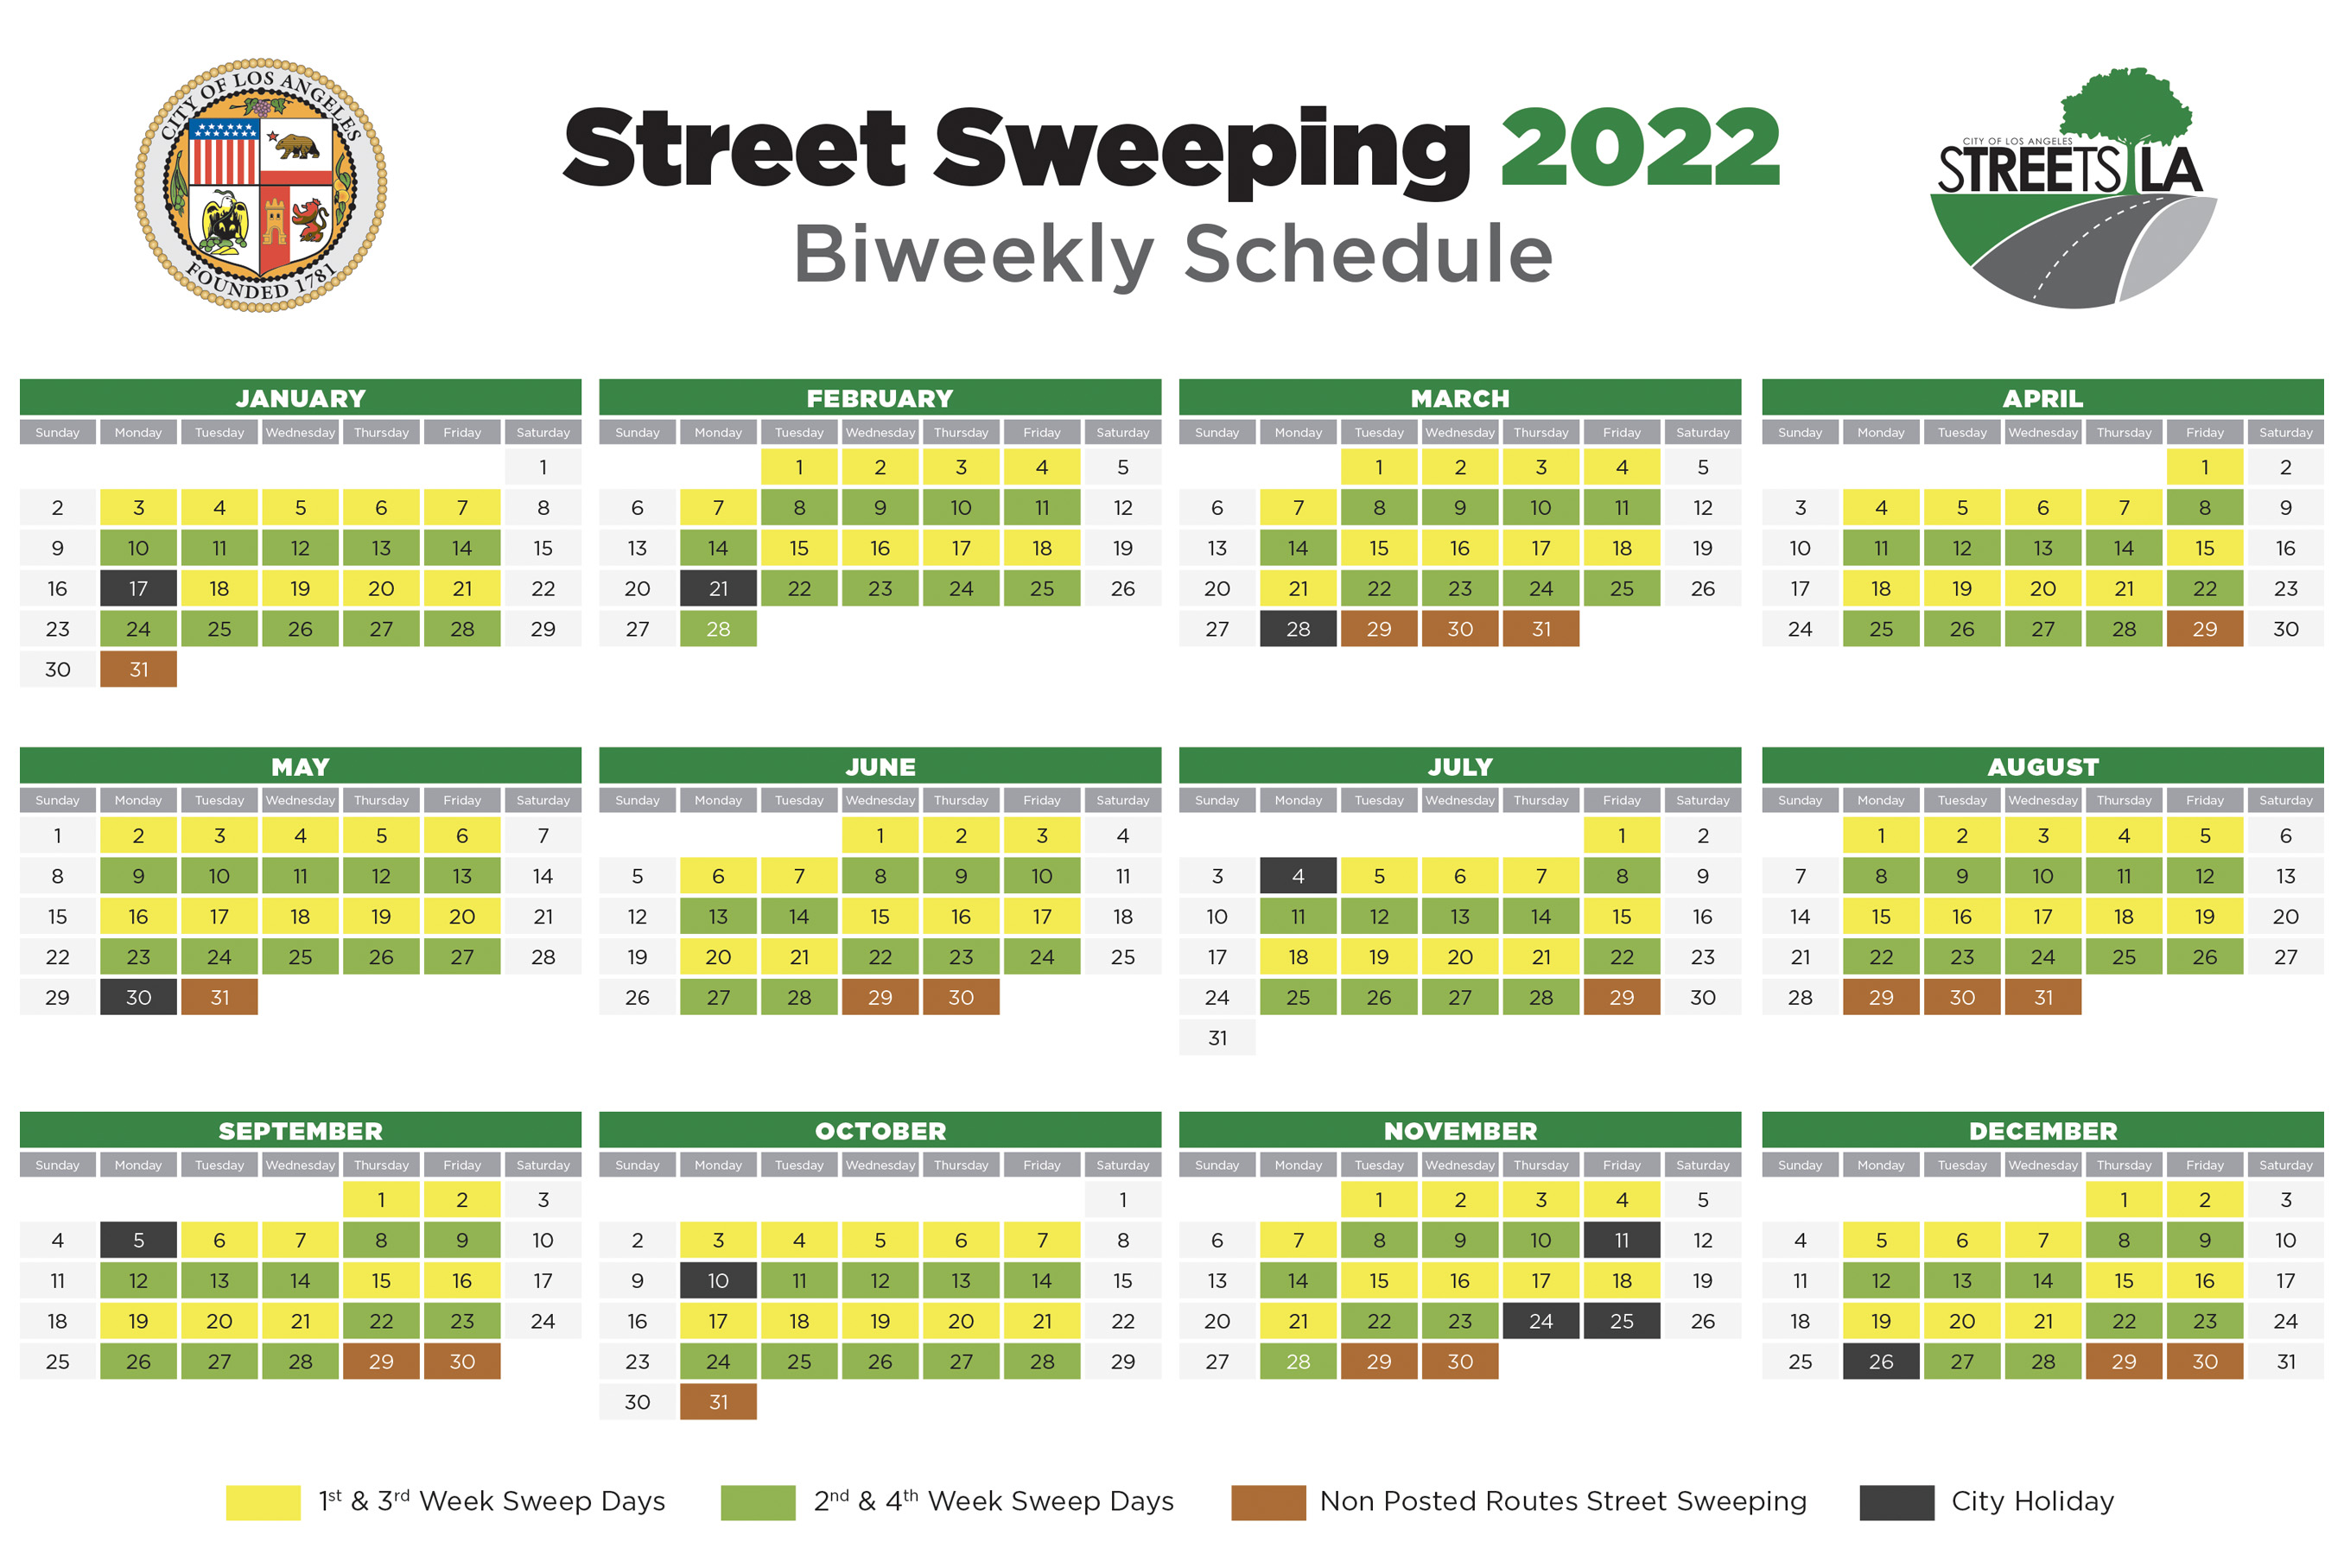 StreetsLA Street Sweeping 2022